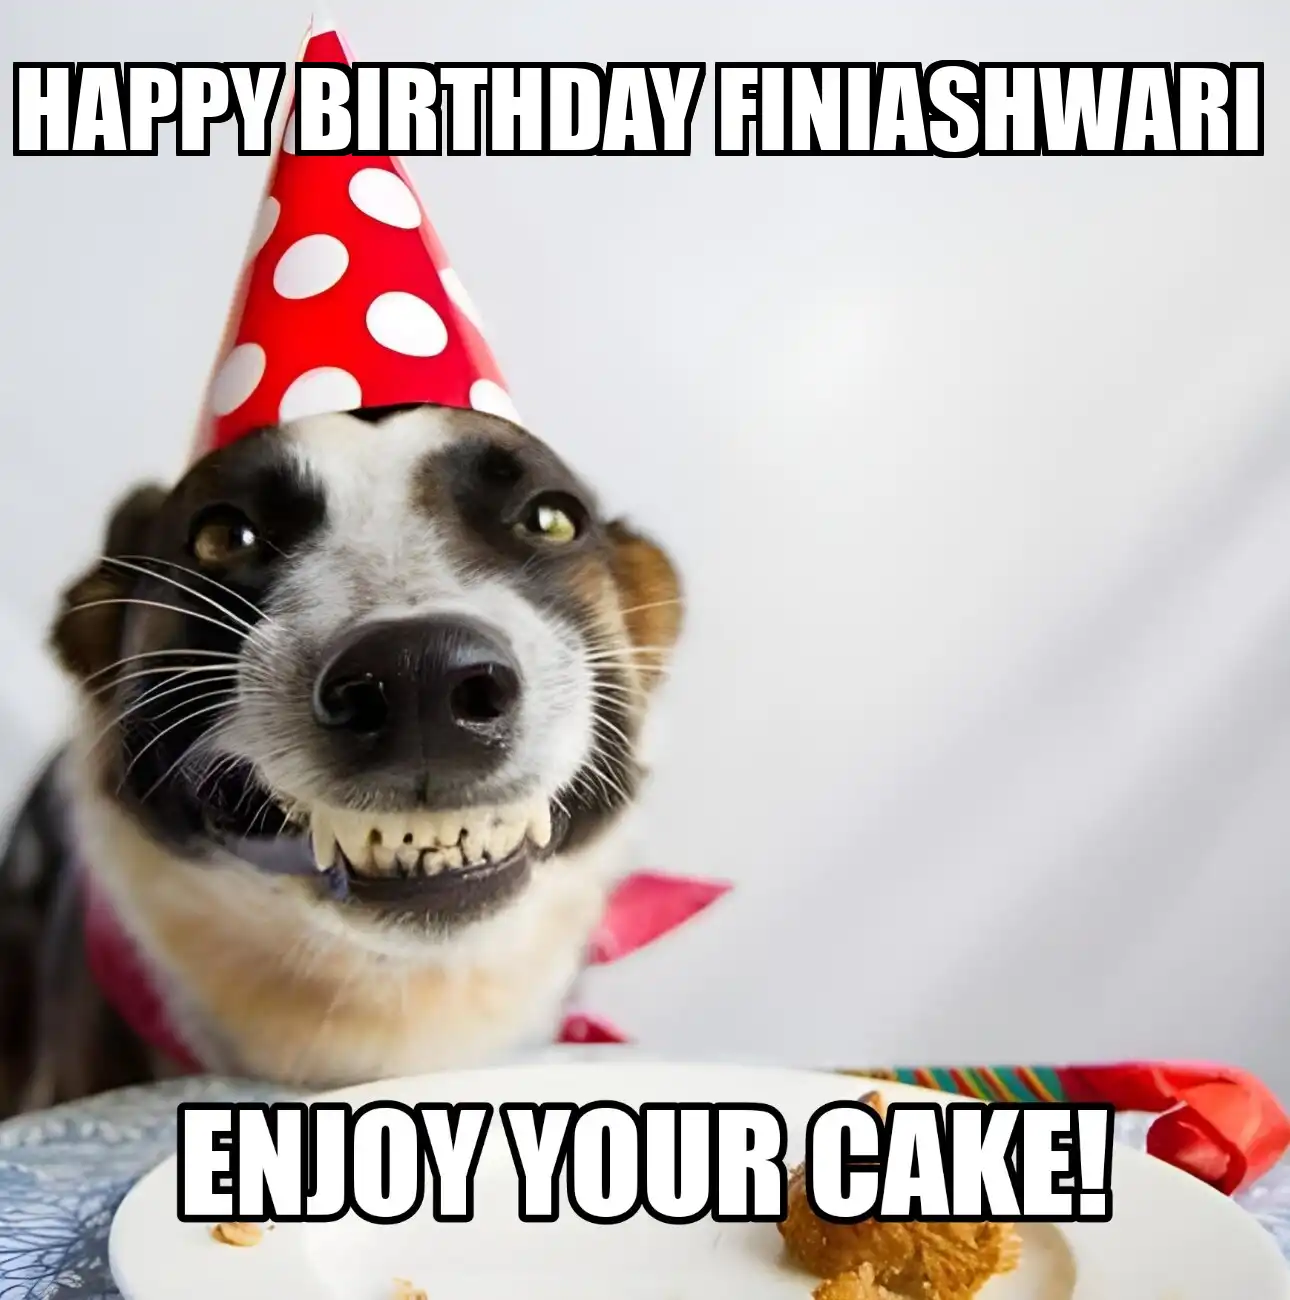 Happy Birthday Finiashwari Enjoy Your Cake Dog Meme